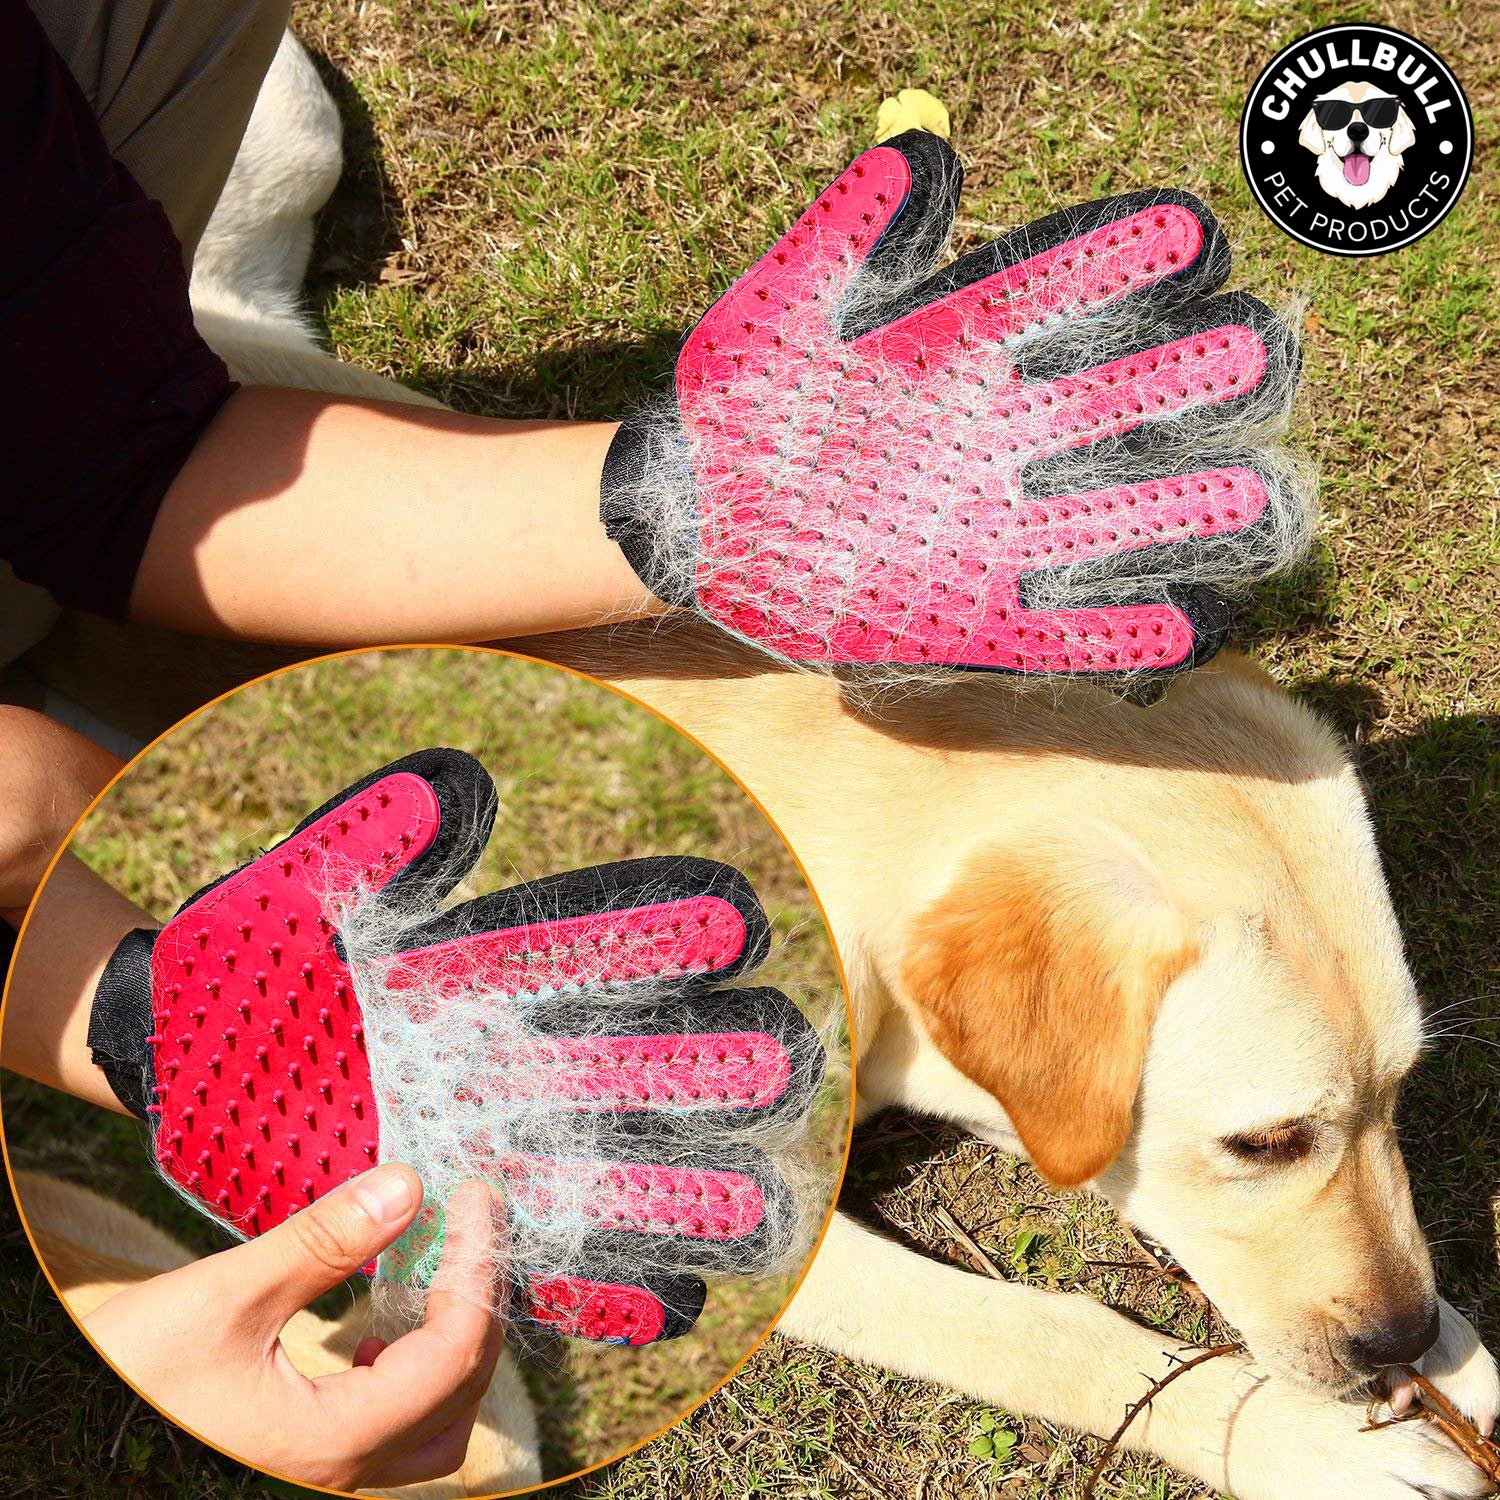 Efficient Pet Hair Remover Gloves Mitt Enhanced 5 Finger Design Gentle Deshedding Brush Gloves for Dog and Cat with Long and Short Fur